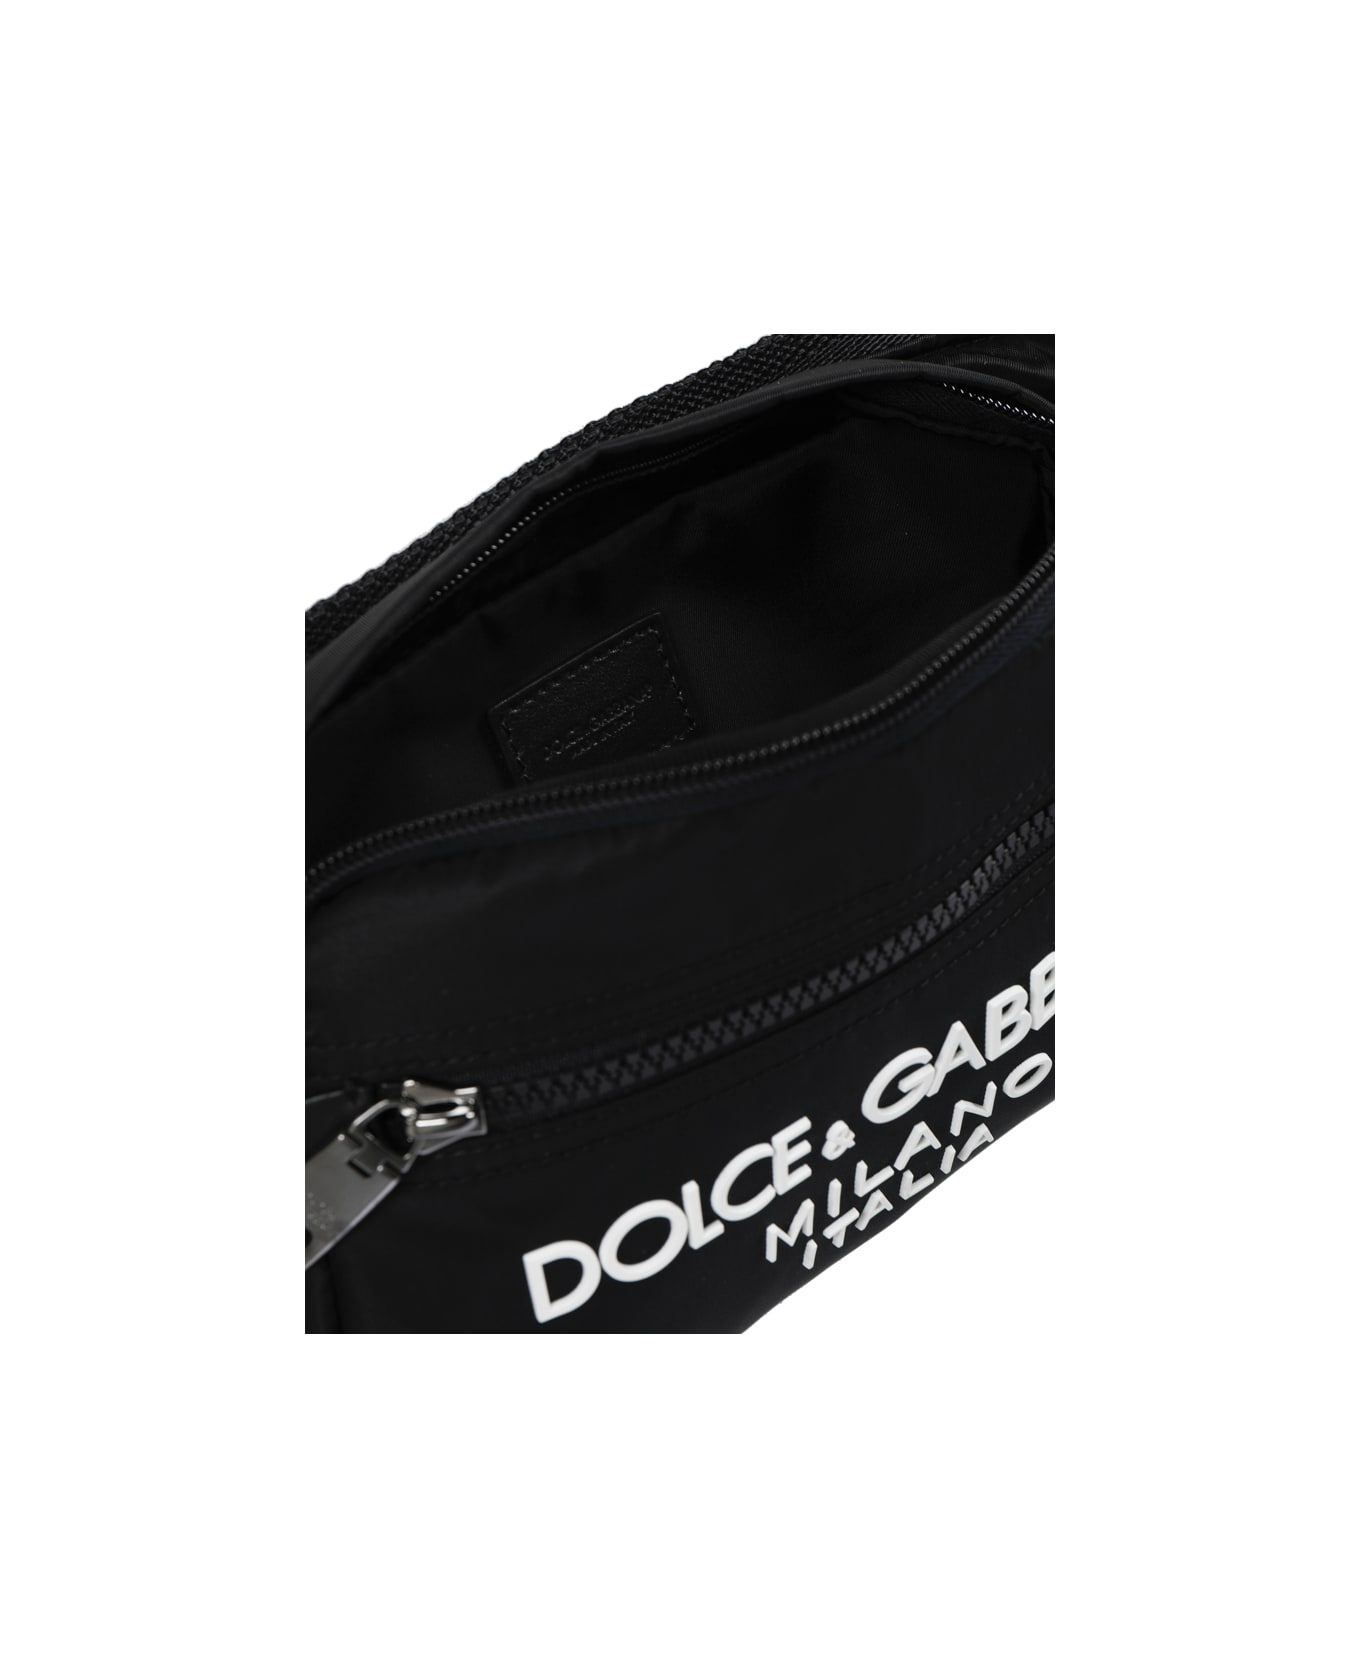 Dolce & Gabbana Nylon Small Belt Bag - Nero/nero